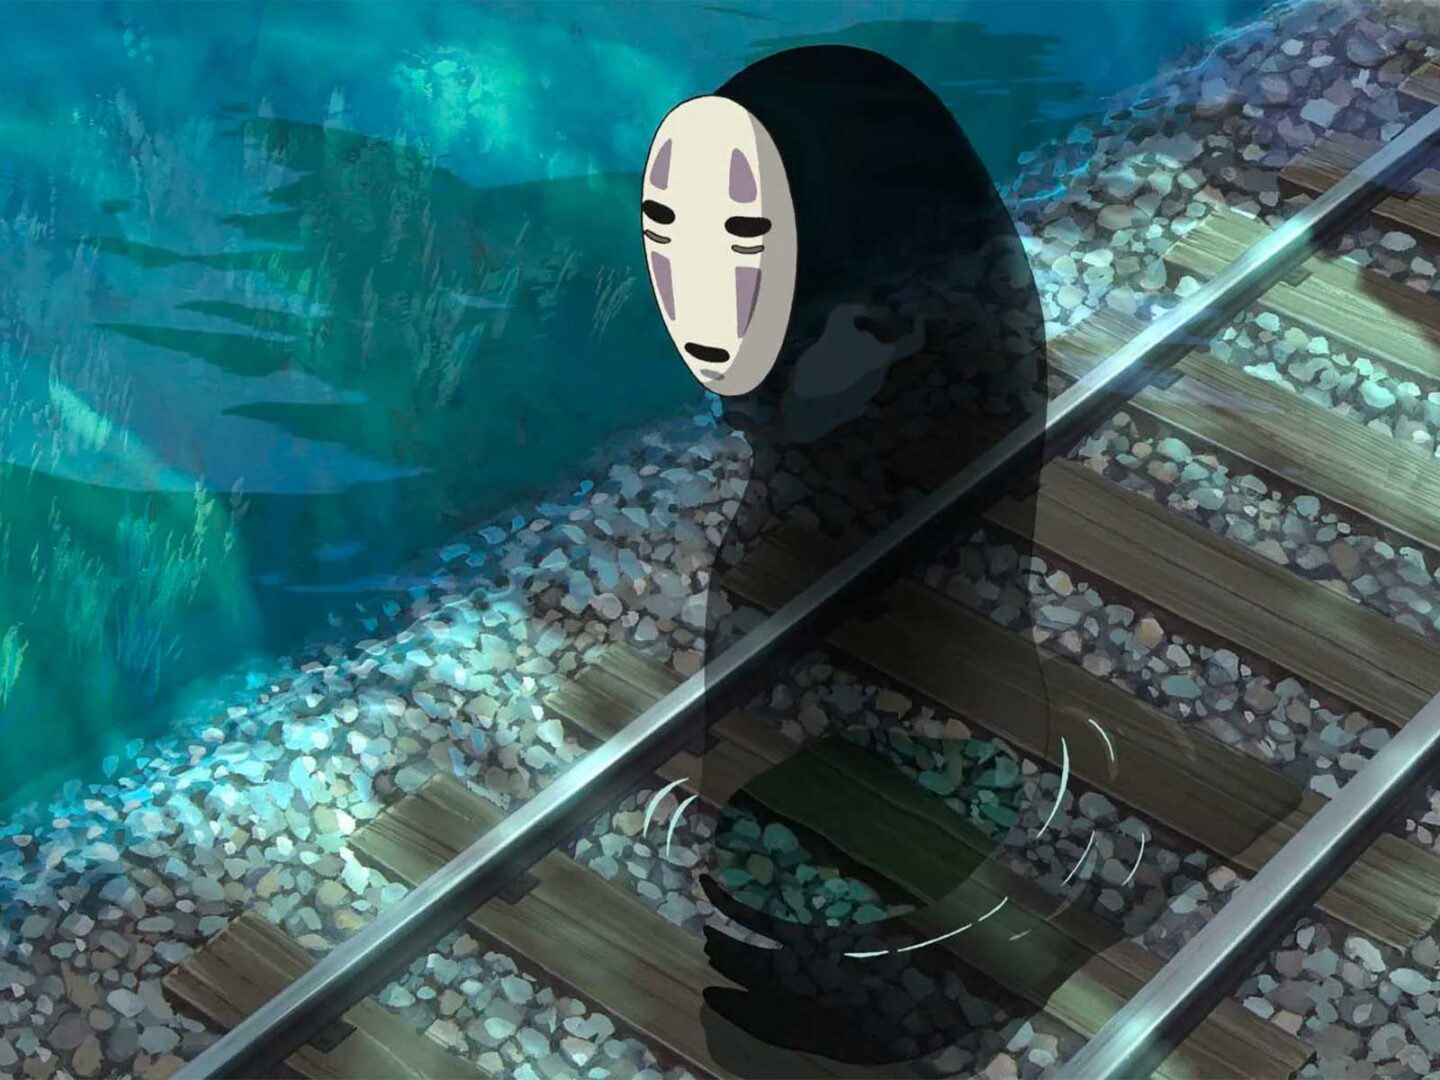 Hayao Miyazaki confesses what the No Face spirit represents